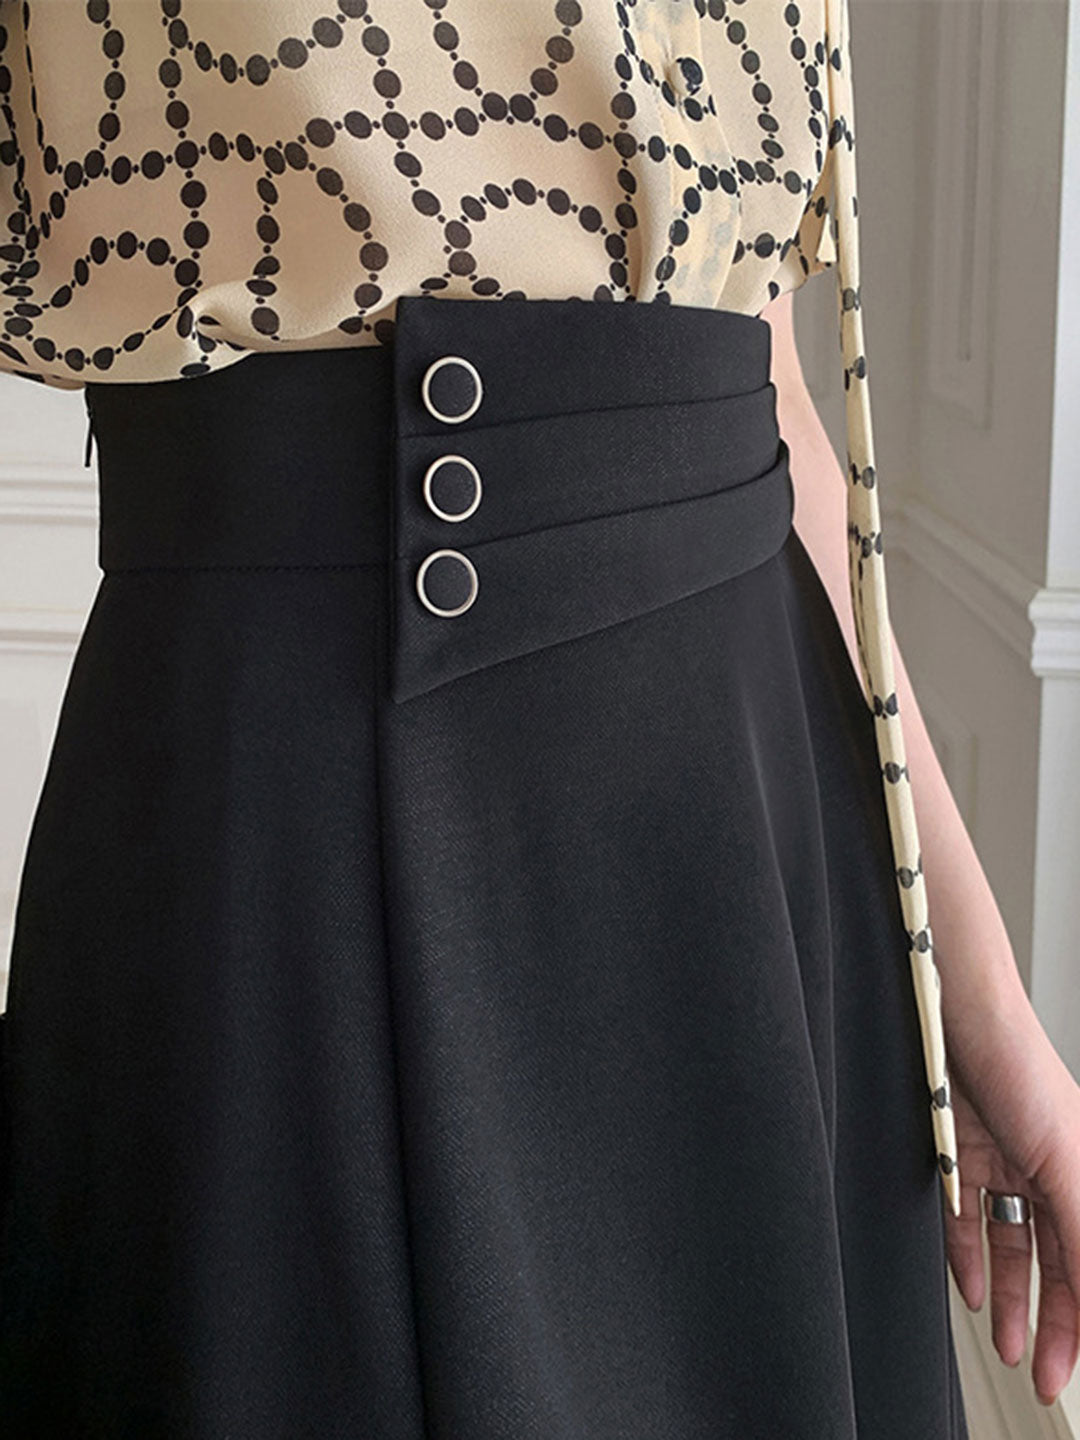 Elizabeth Retro High Waist A-Line Pleated Skirt-Black